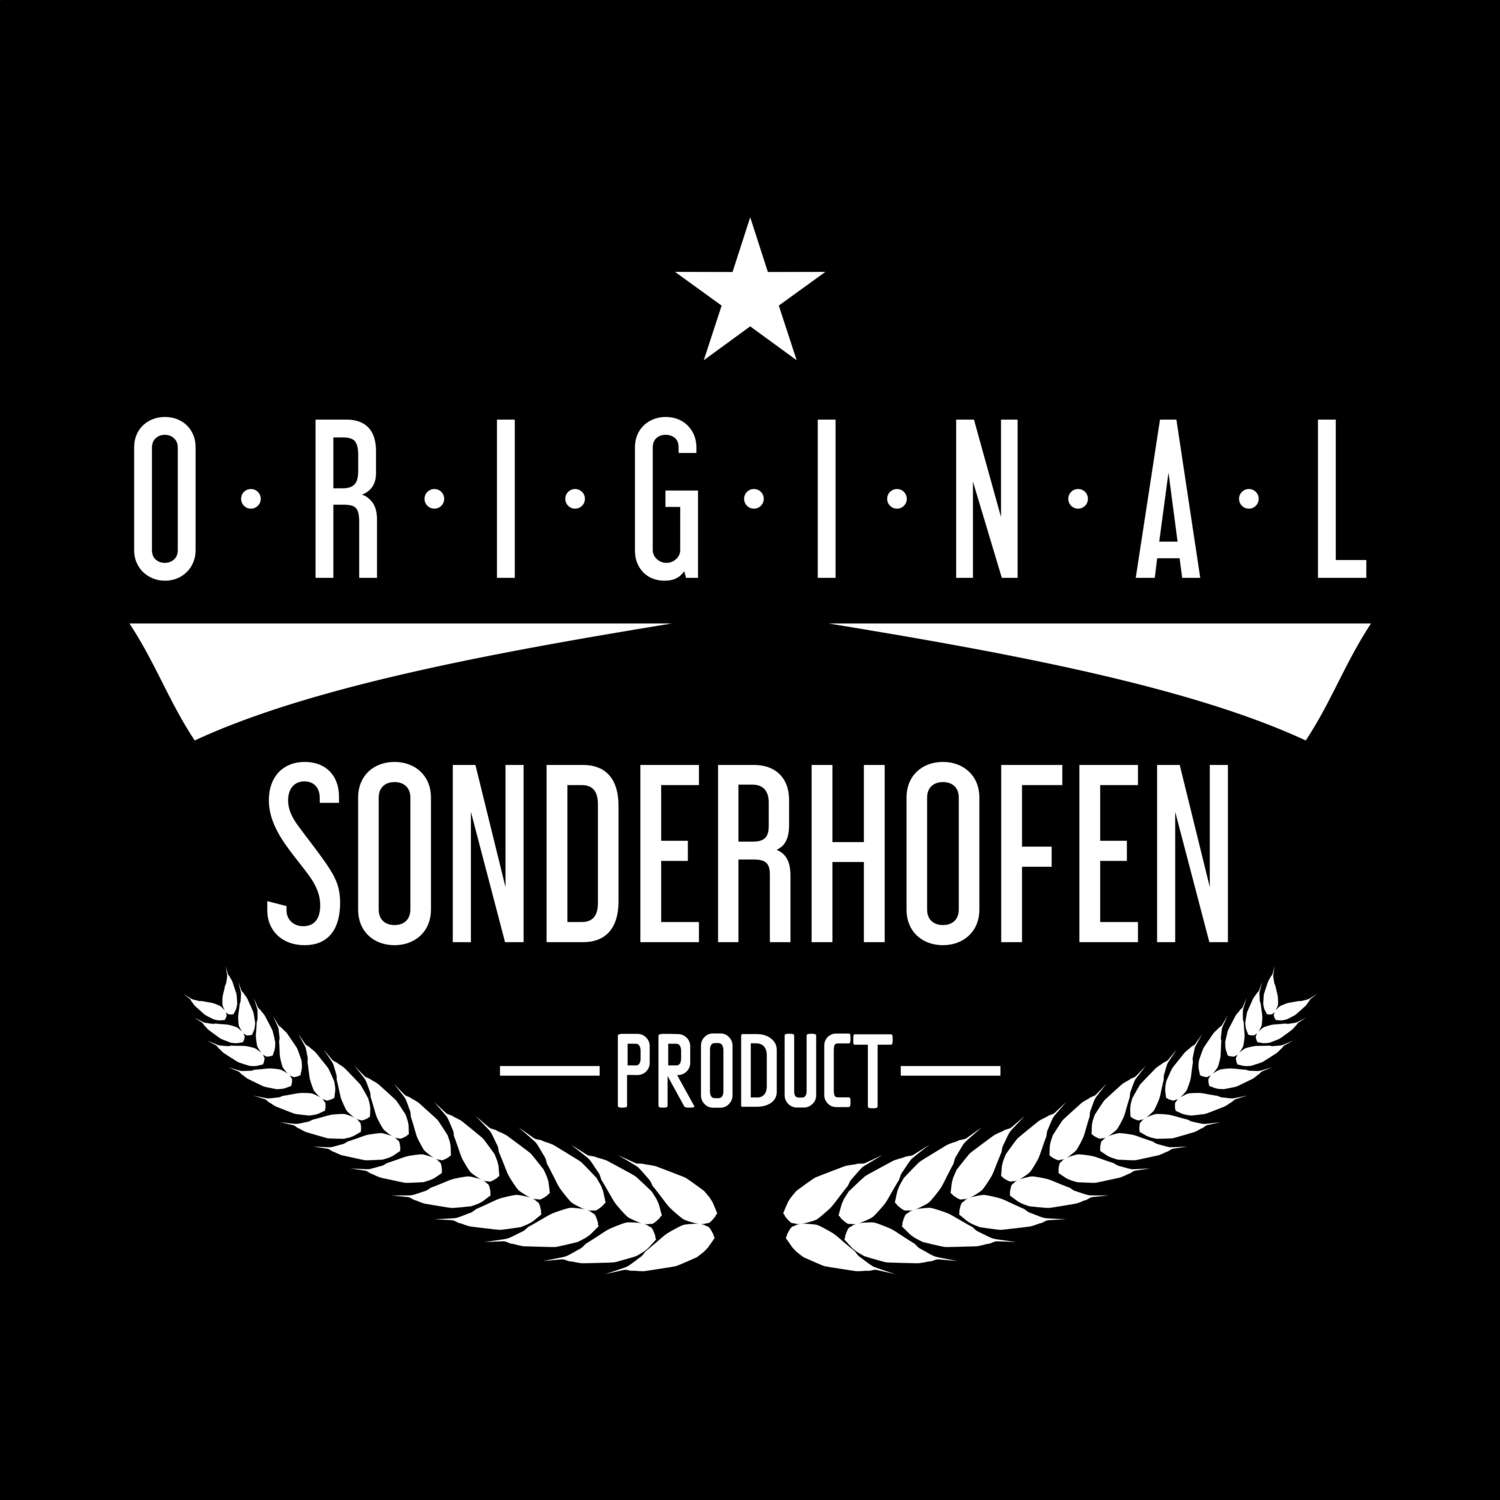 Sonderhofen T-Shirt »Original Product«